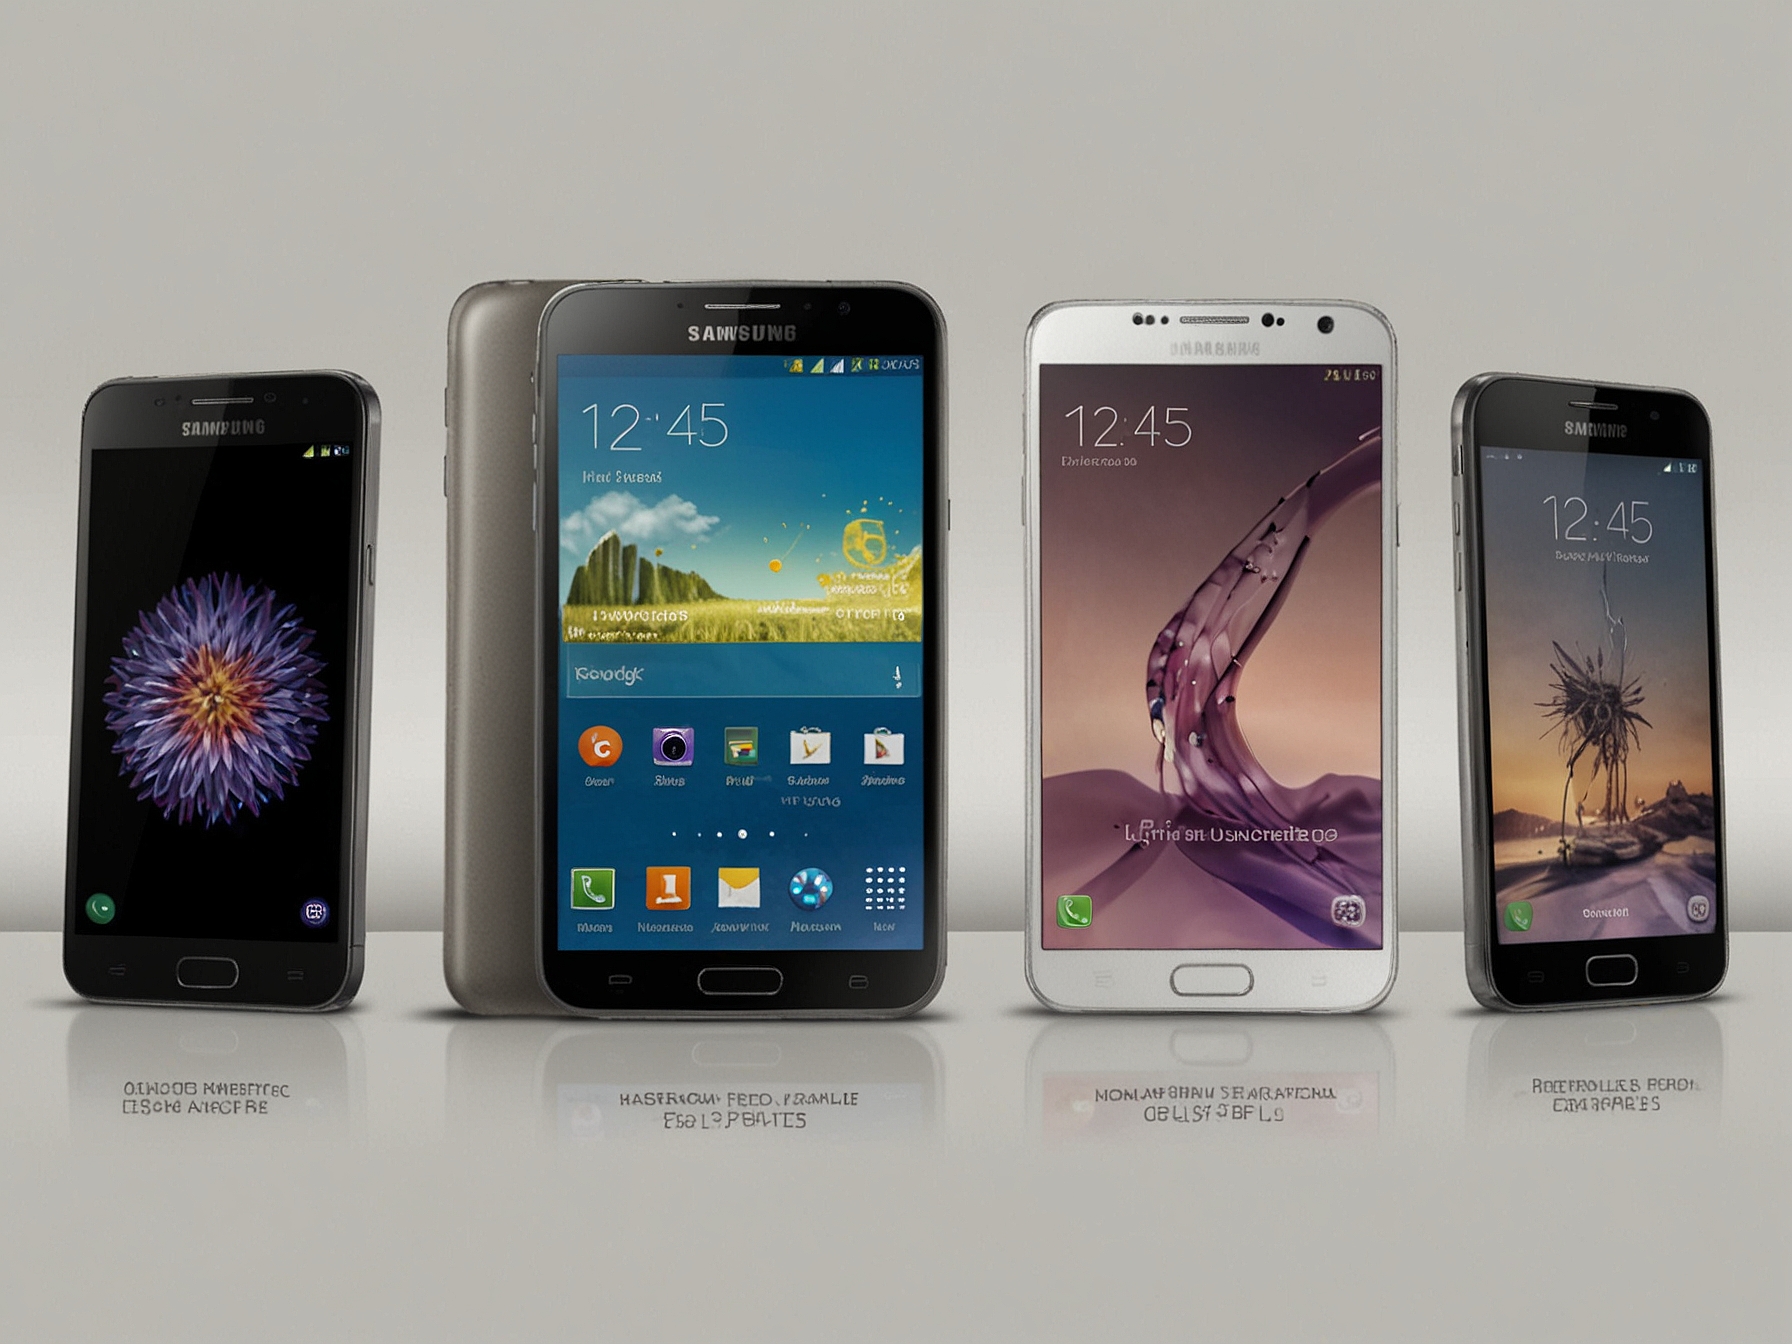 Two contrasting sections illustrating Samsung's diverse range of smartphones, including budget models, alongside Apple's premium iPhone models, emphasizing their market strategies.